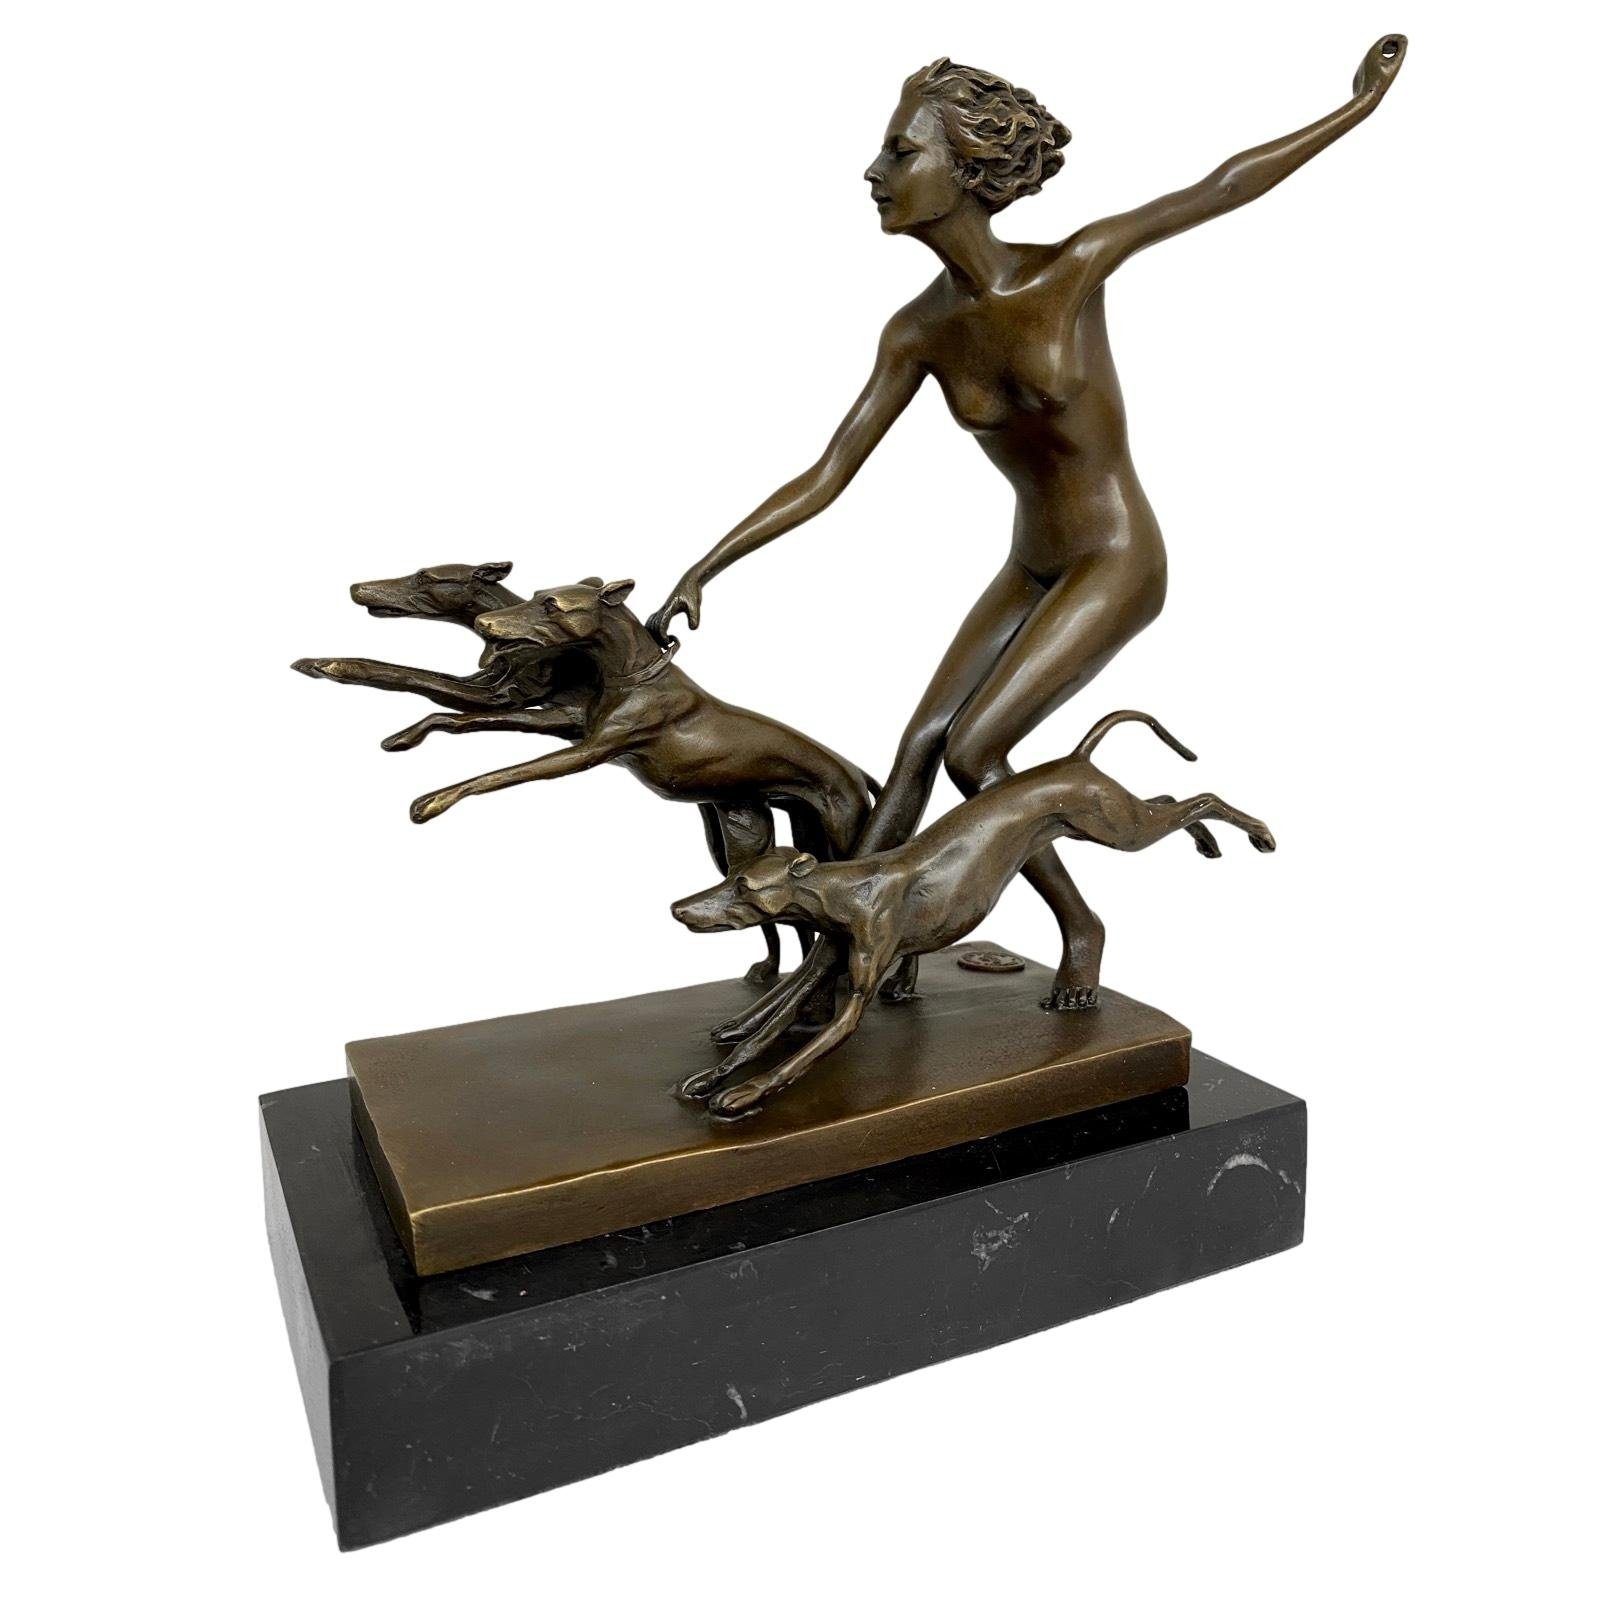 Aubaho Skulptur Replik Göttin Figur Antik-Stil Diana Lorenzl Bronzeskulptur nach Hund